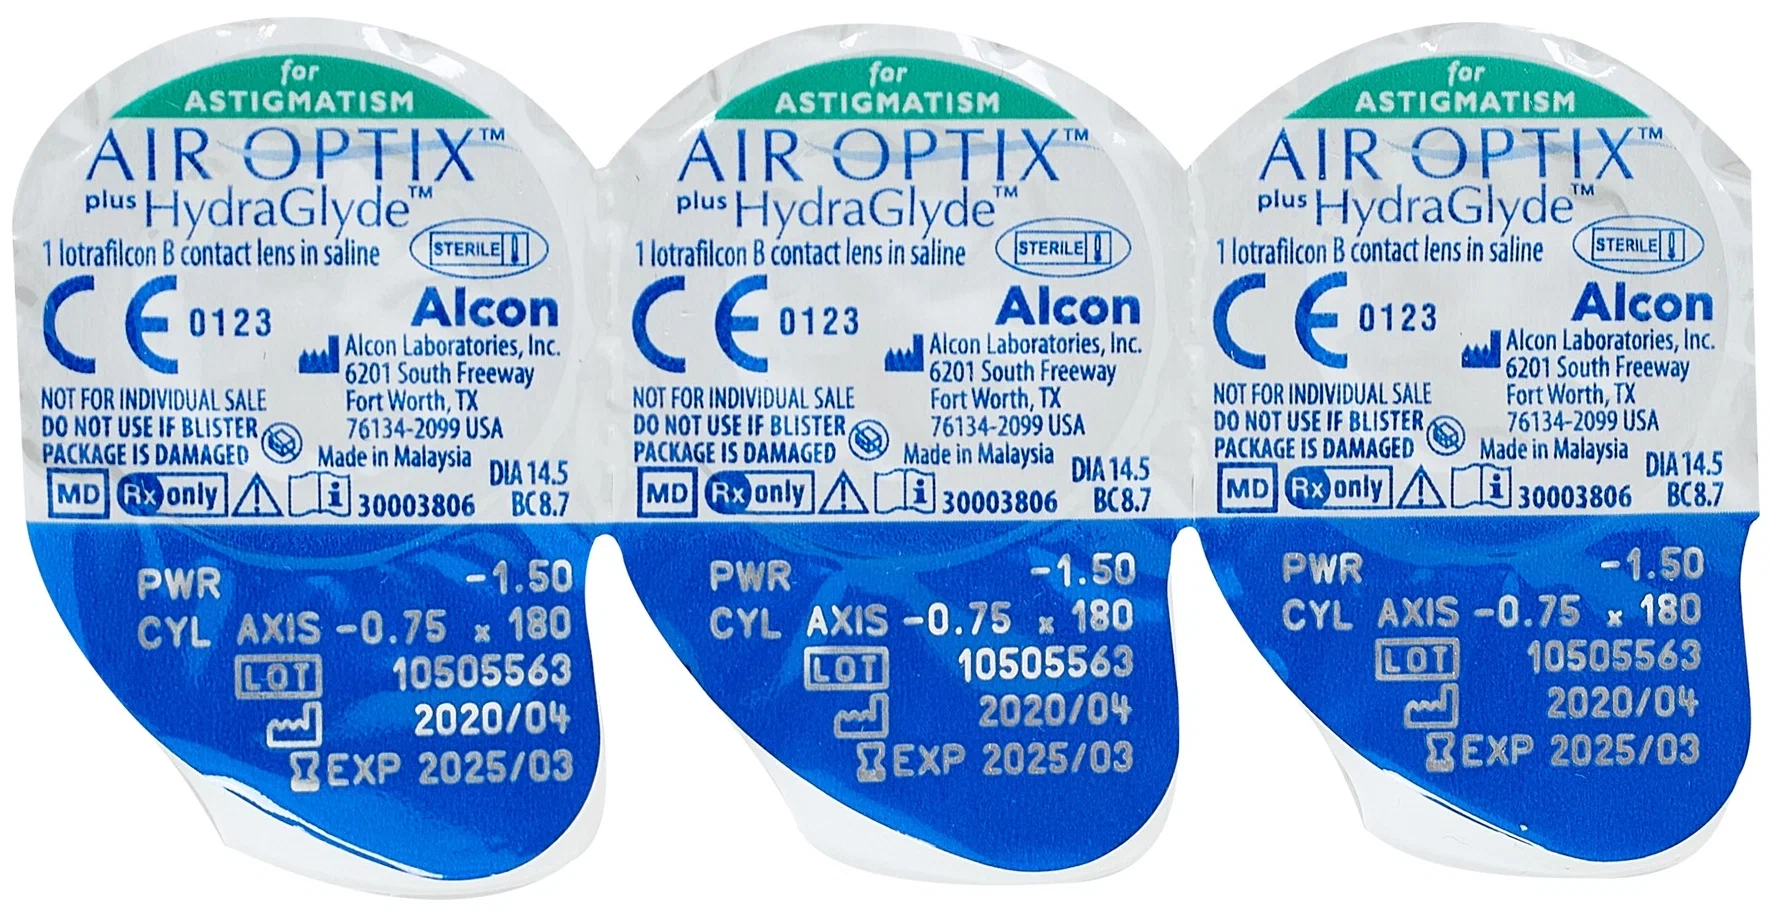 Air Optix (Alcon) Plus HydraGlyde for Astigmatism, 3 шт. - количество линз в упаковке: 3